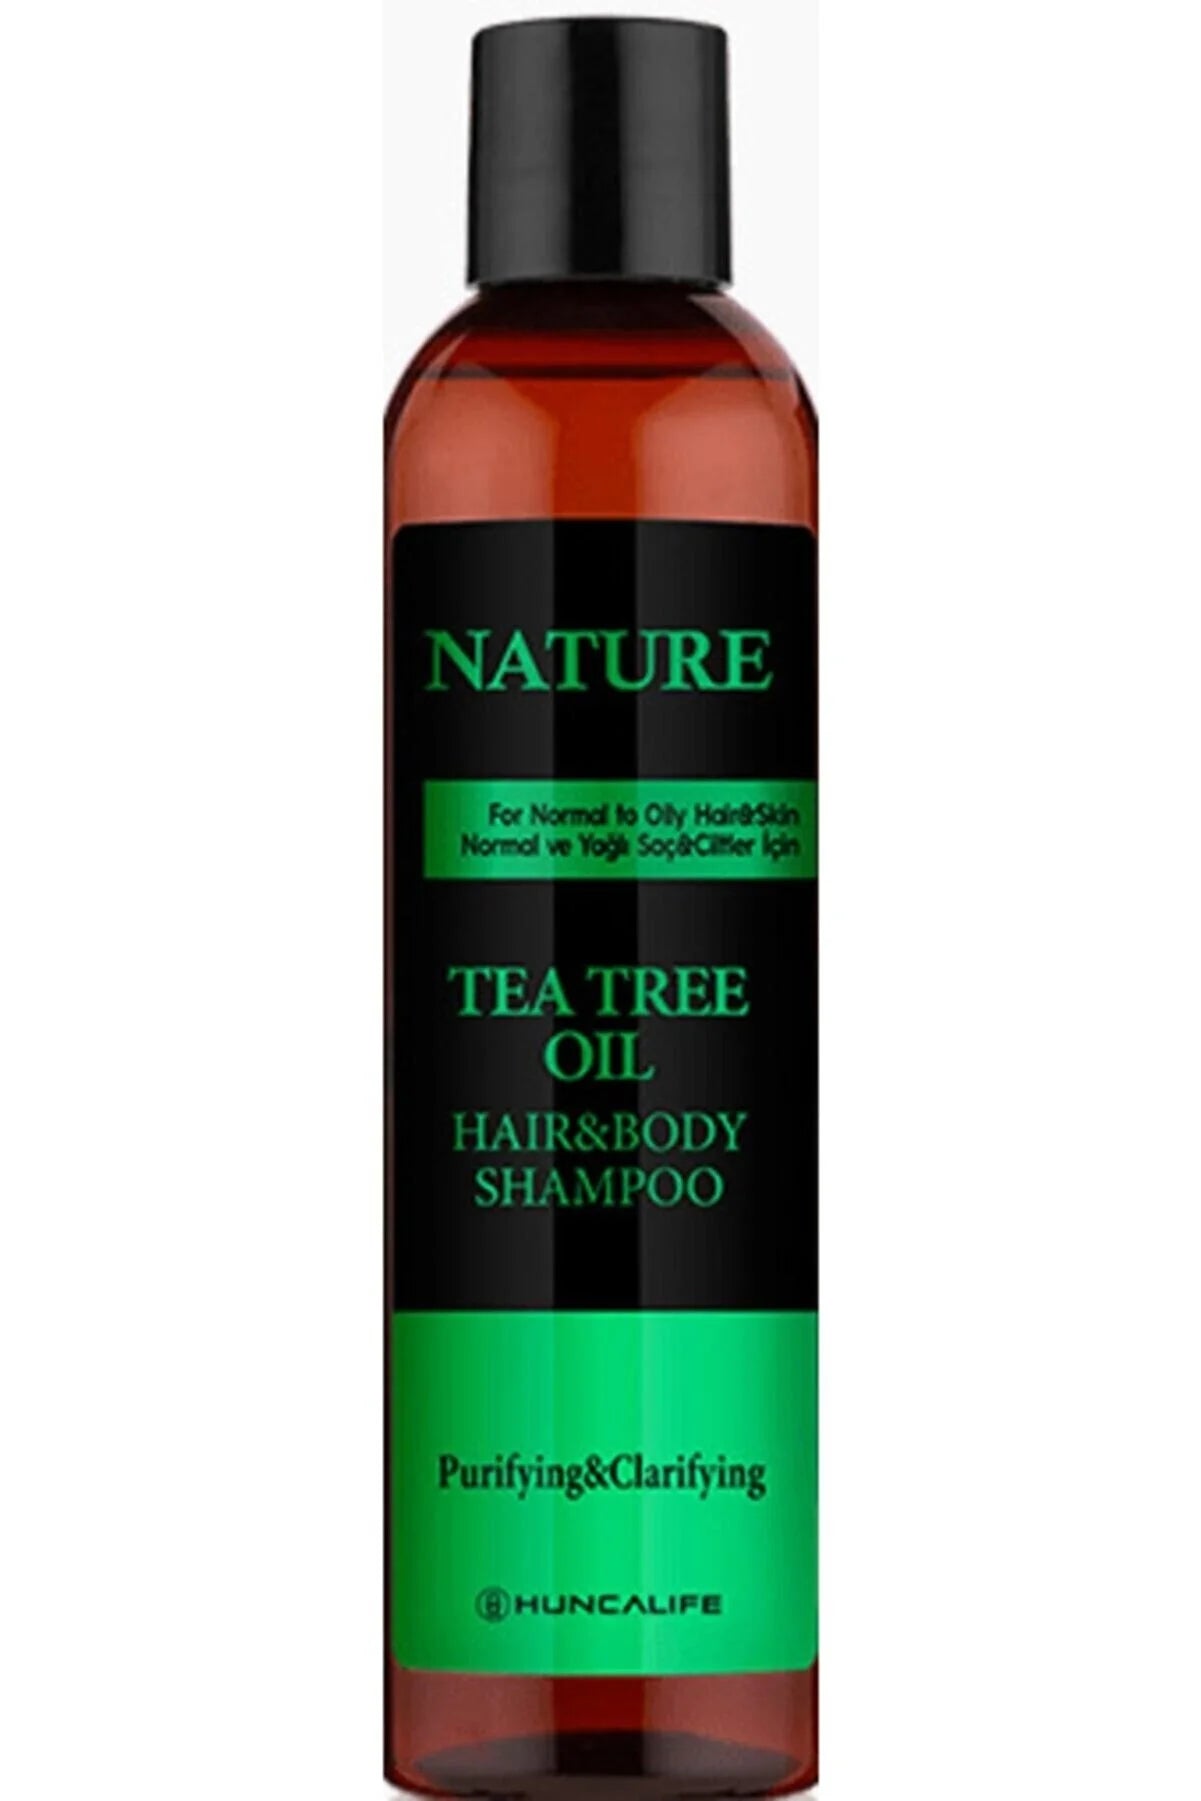 Huncalife Nature Tea Tree Oil Hair & Body Shampoo 350ml